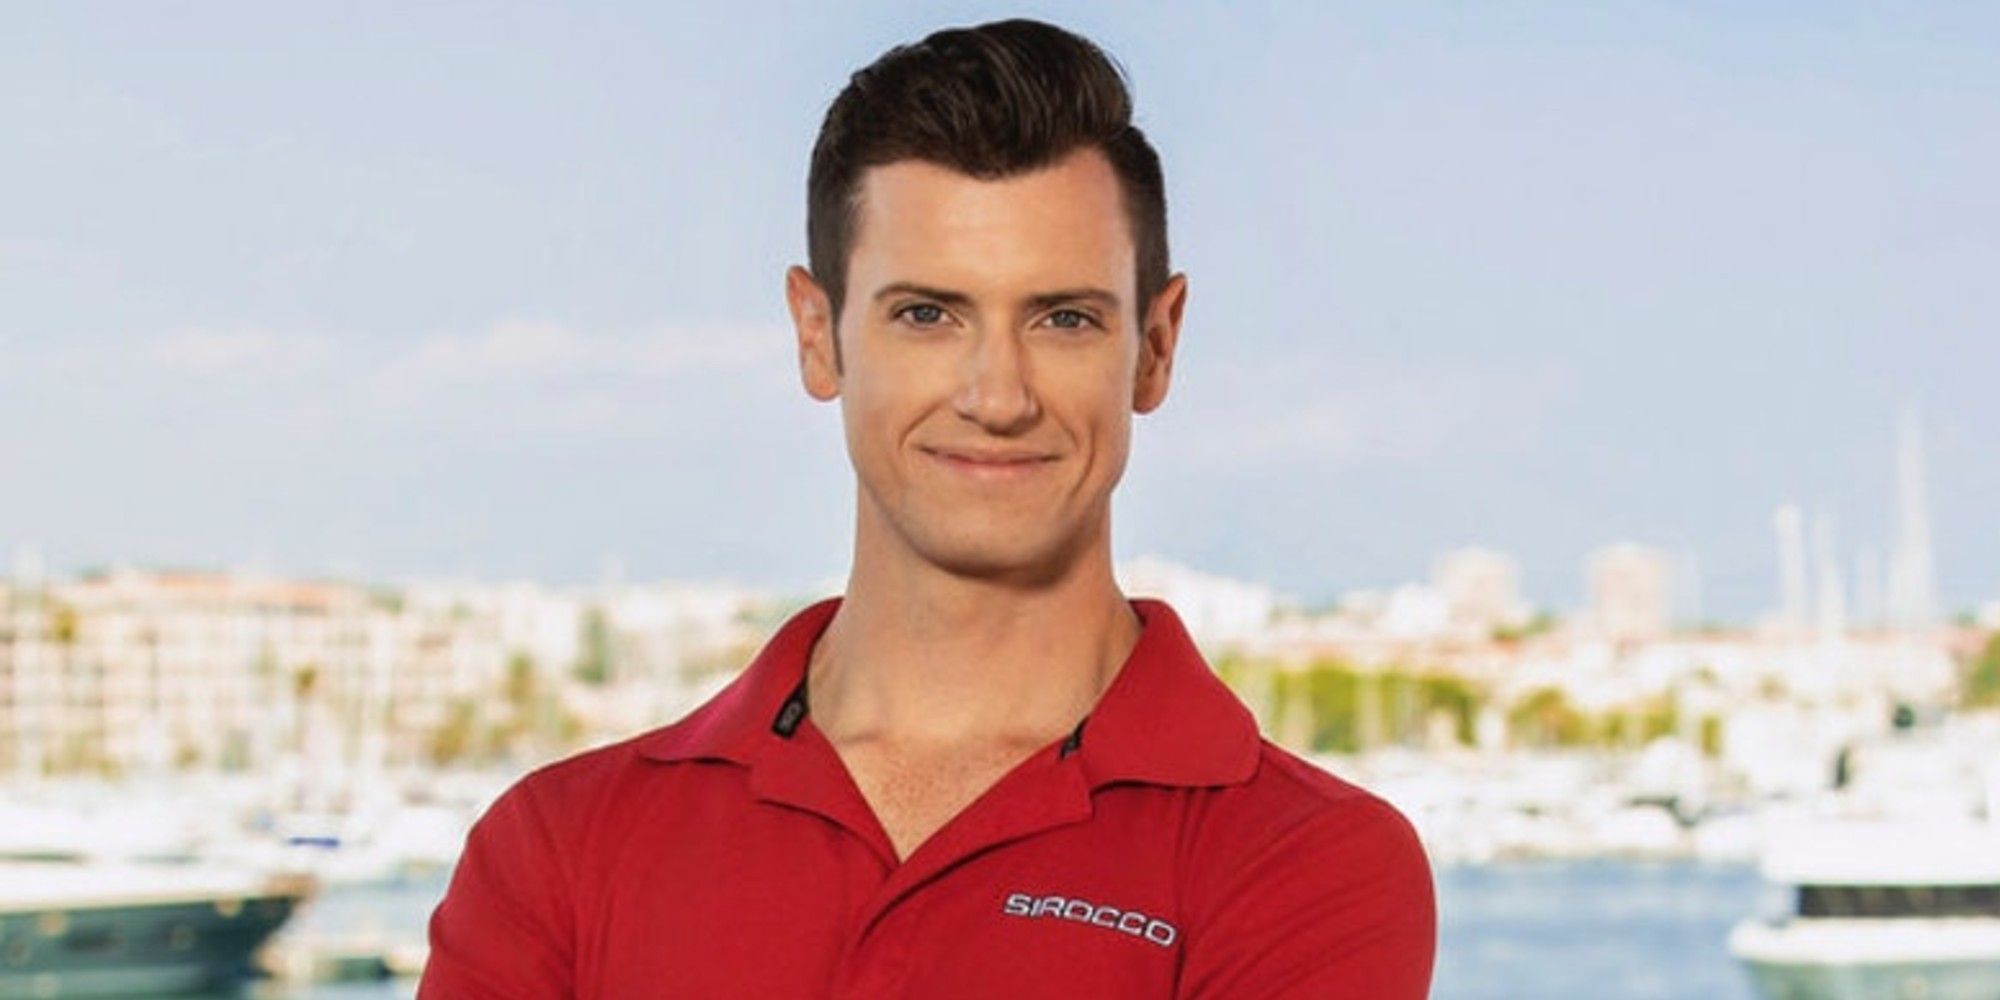 colin macy-o'toole wearing red shirt in promo shot at marina